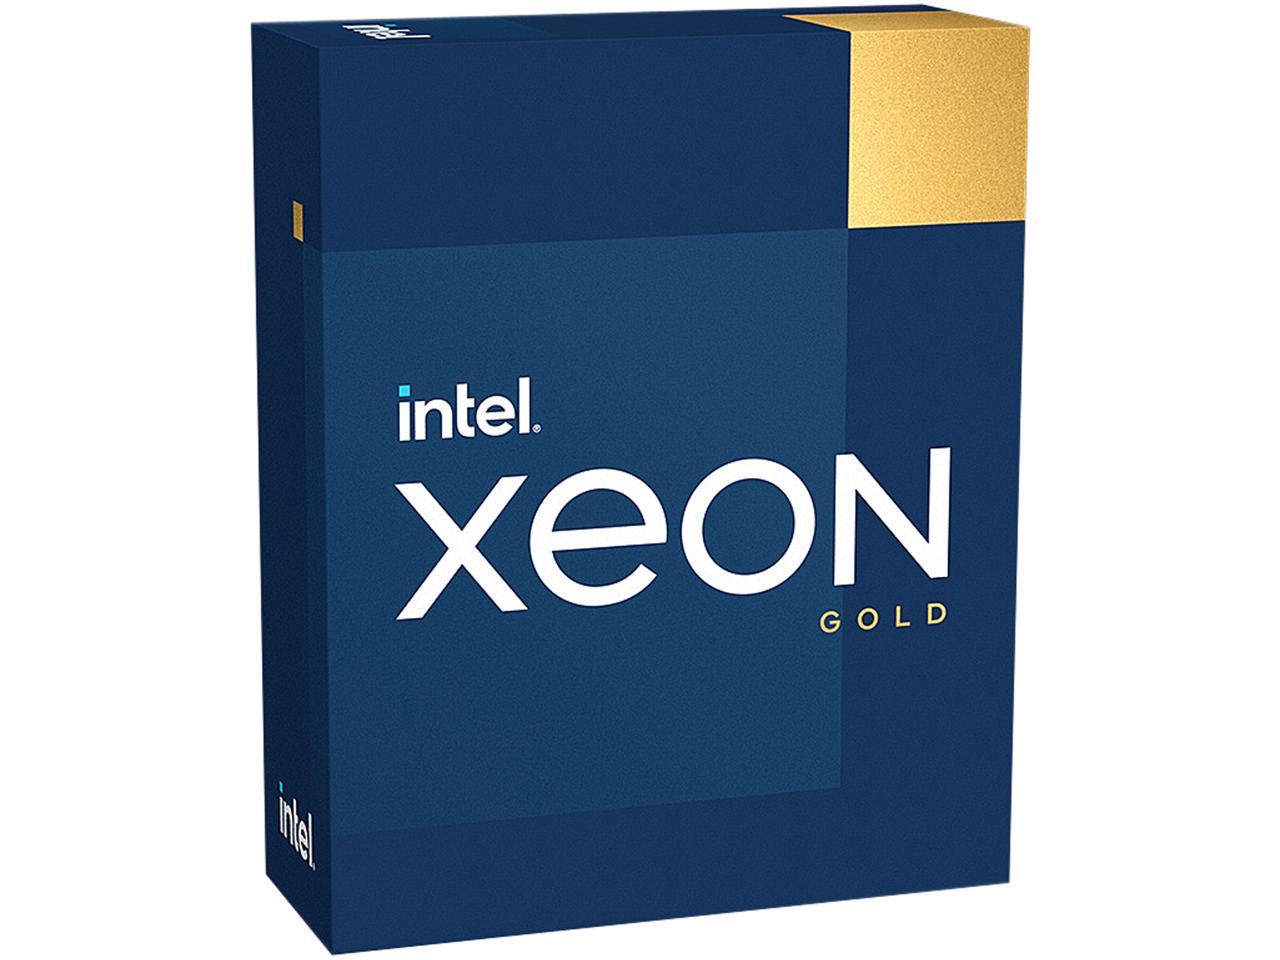 Intel Xeon Gold 5320 Ice Lake 2.2 GHz 39MB L3 Cache LGA 4189 185W BX806895320 Server Processor - image 1 of 2